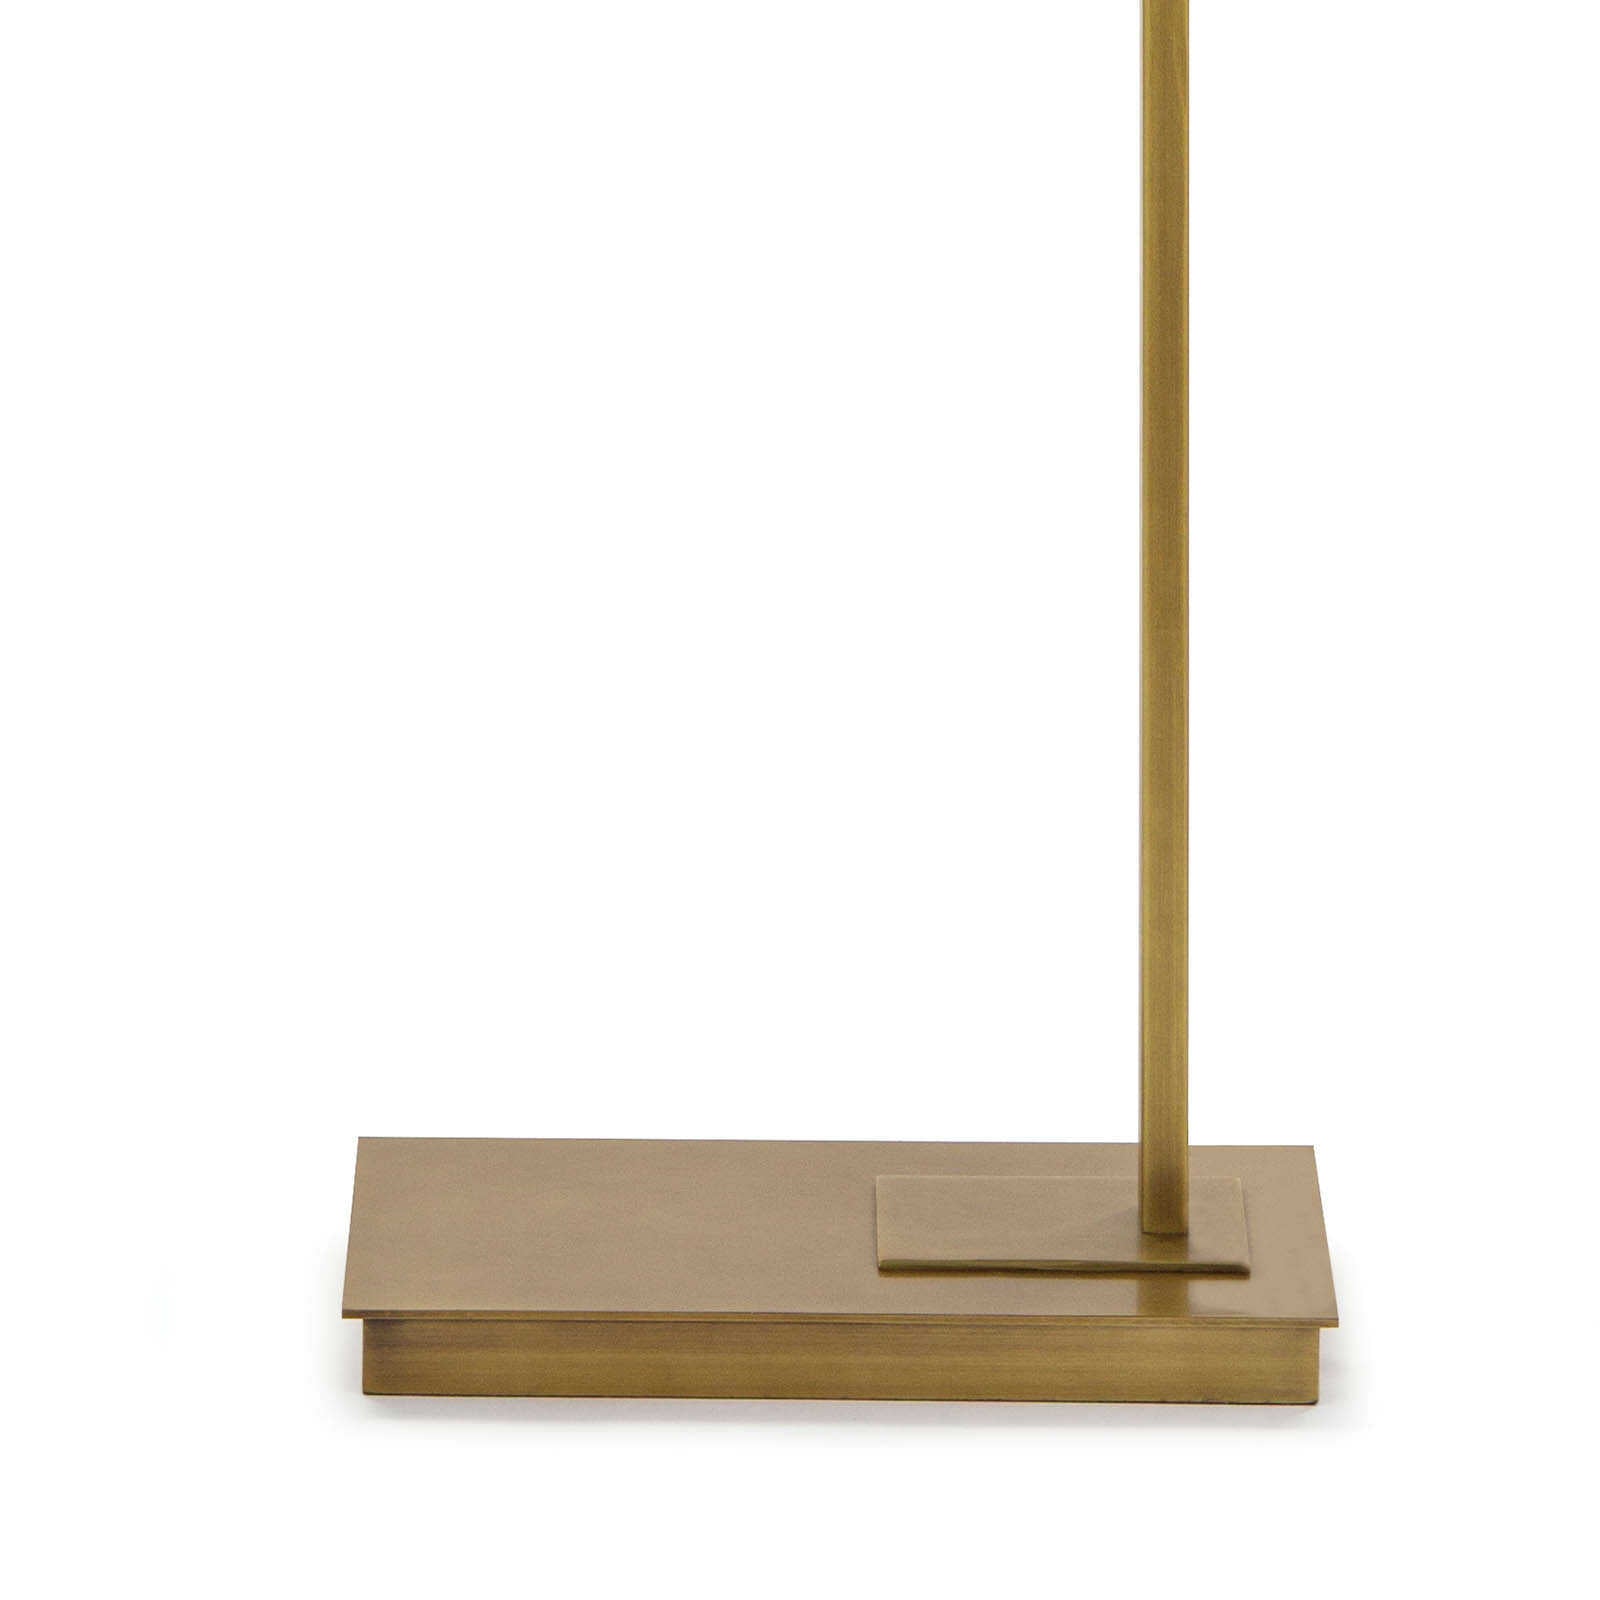 Otto Floor Lamp in Natural Brass by Regina Andrew